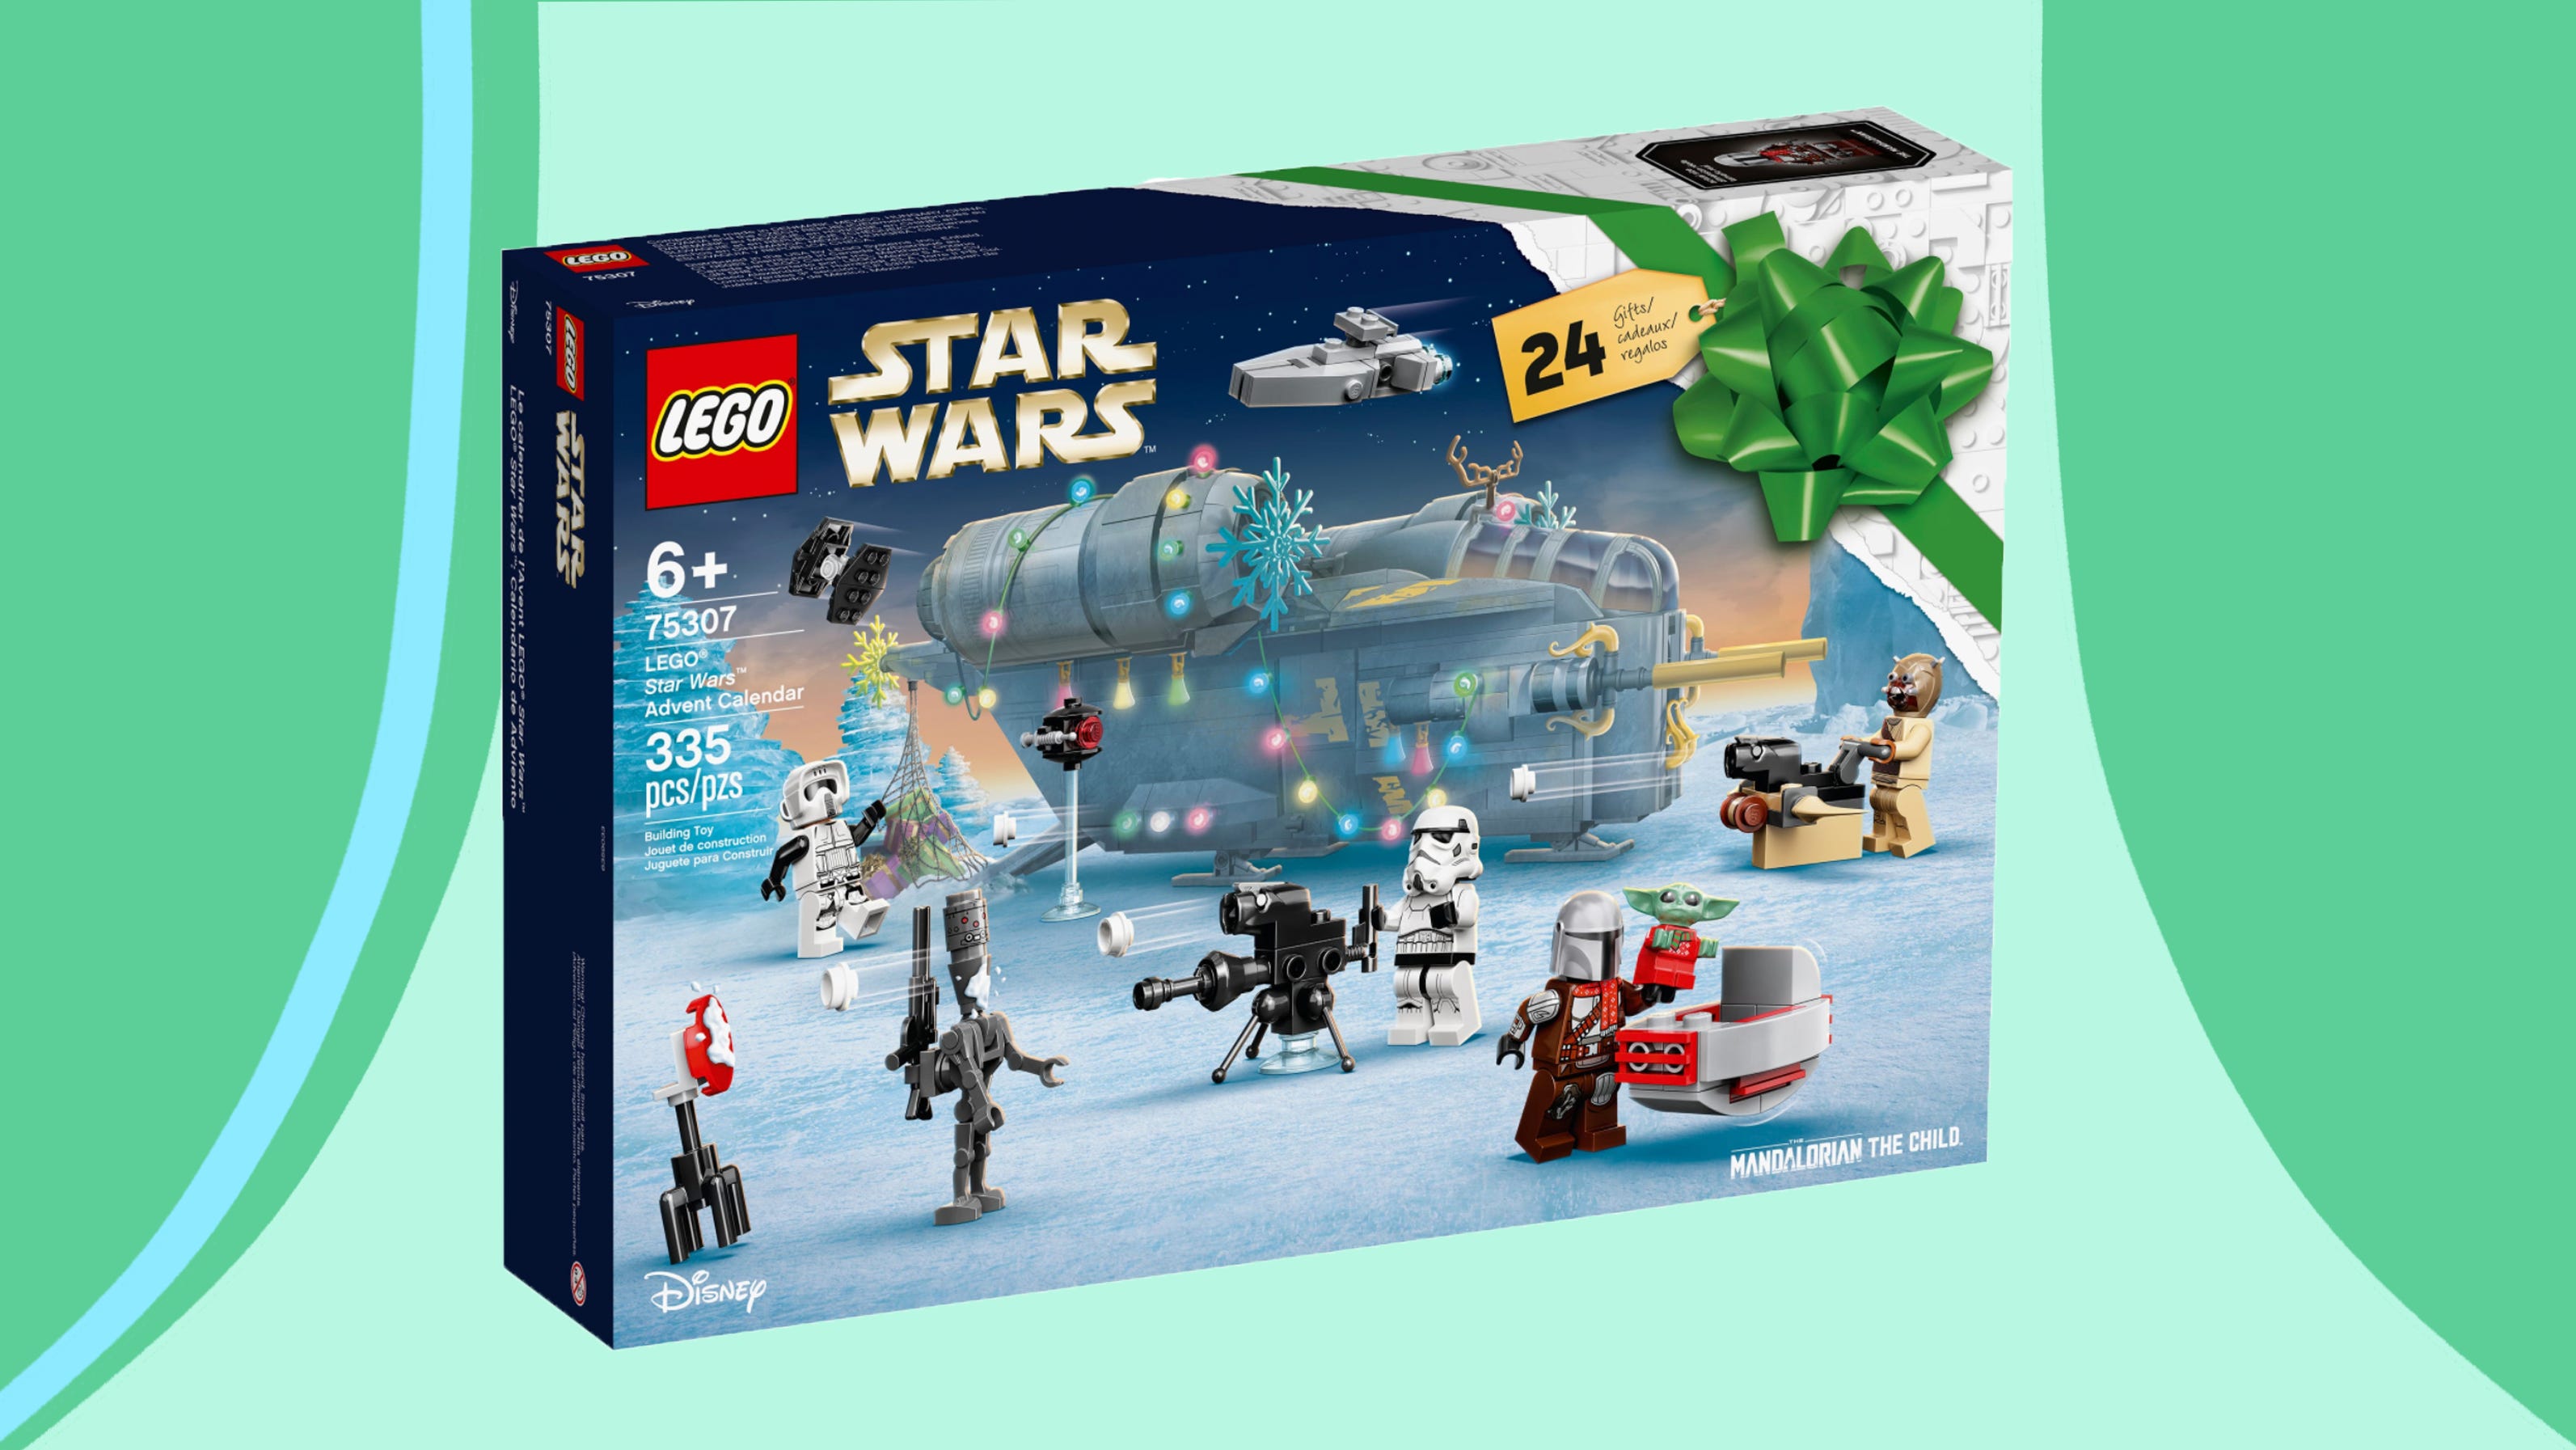 buy the Lego Star Wars Advent Calendar